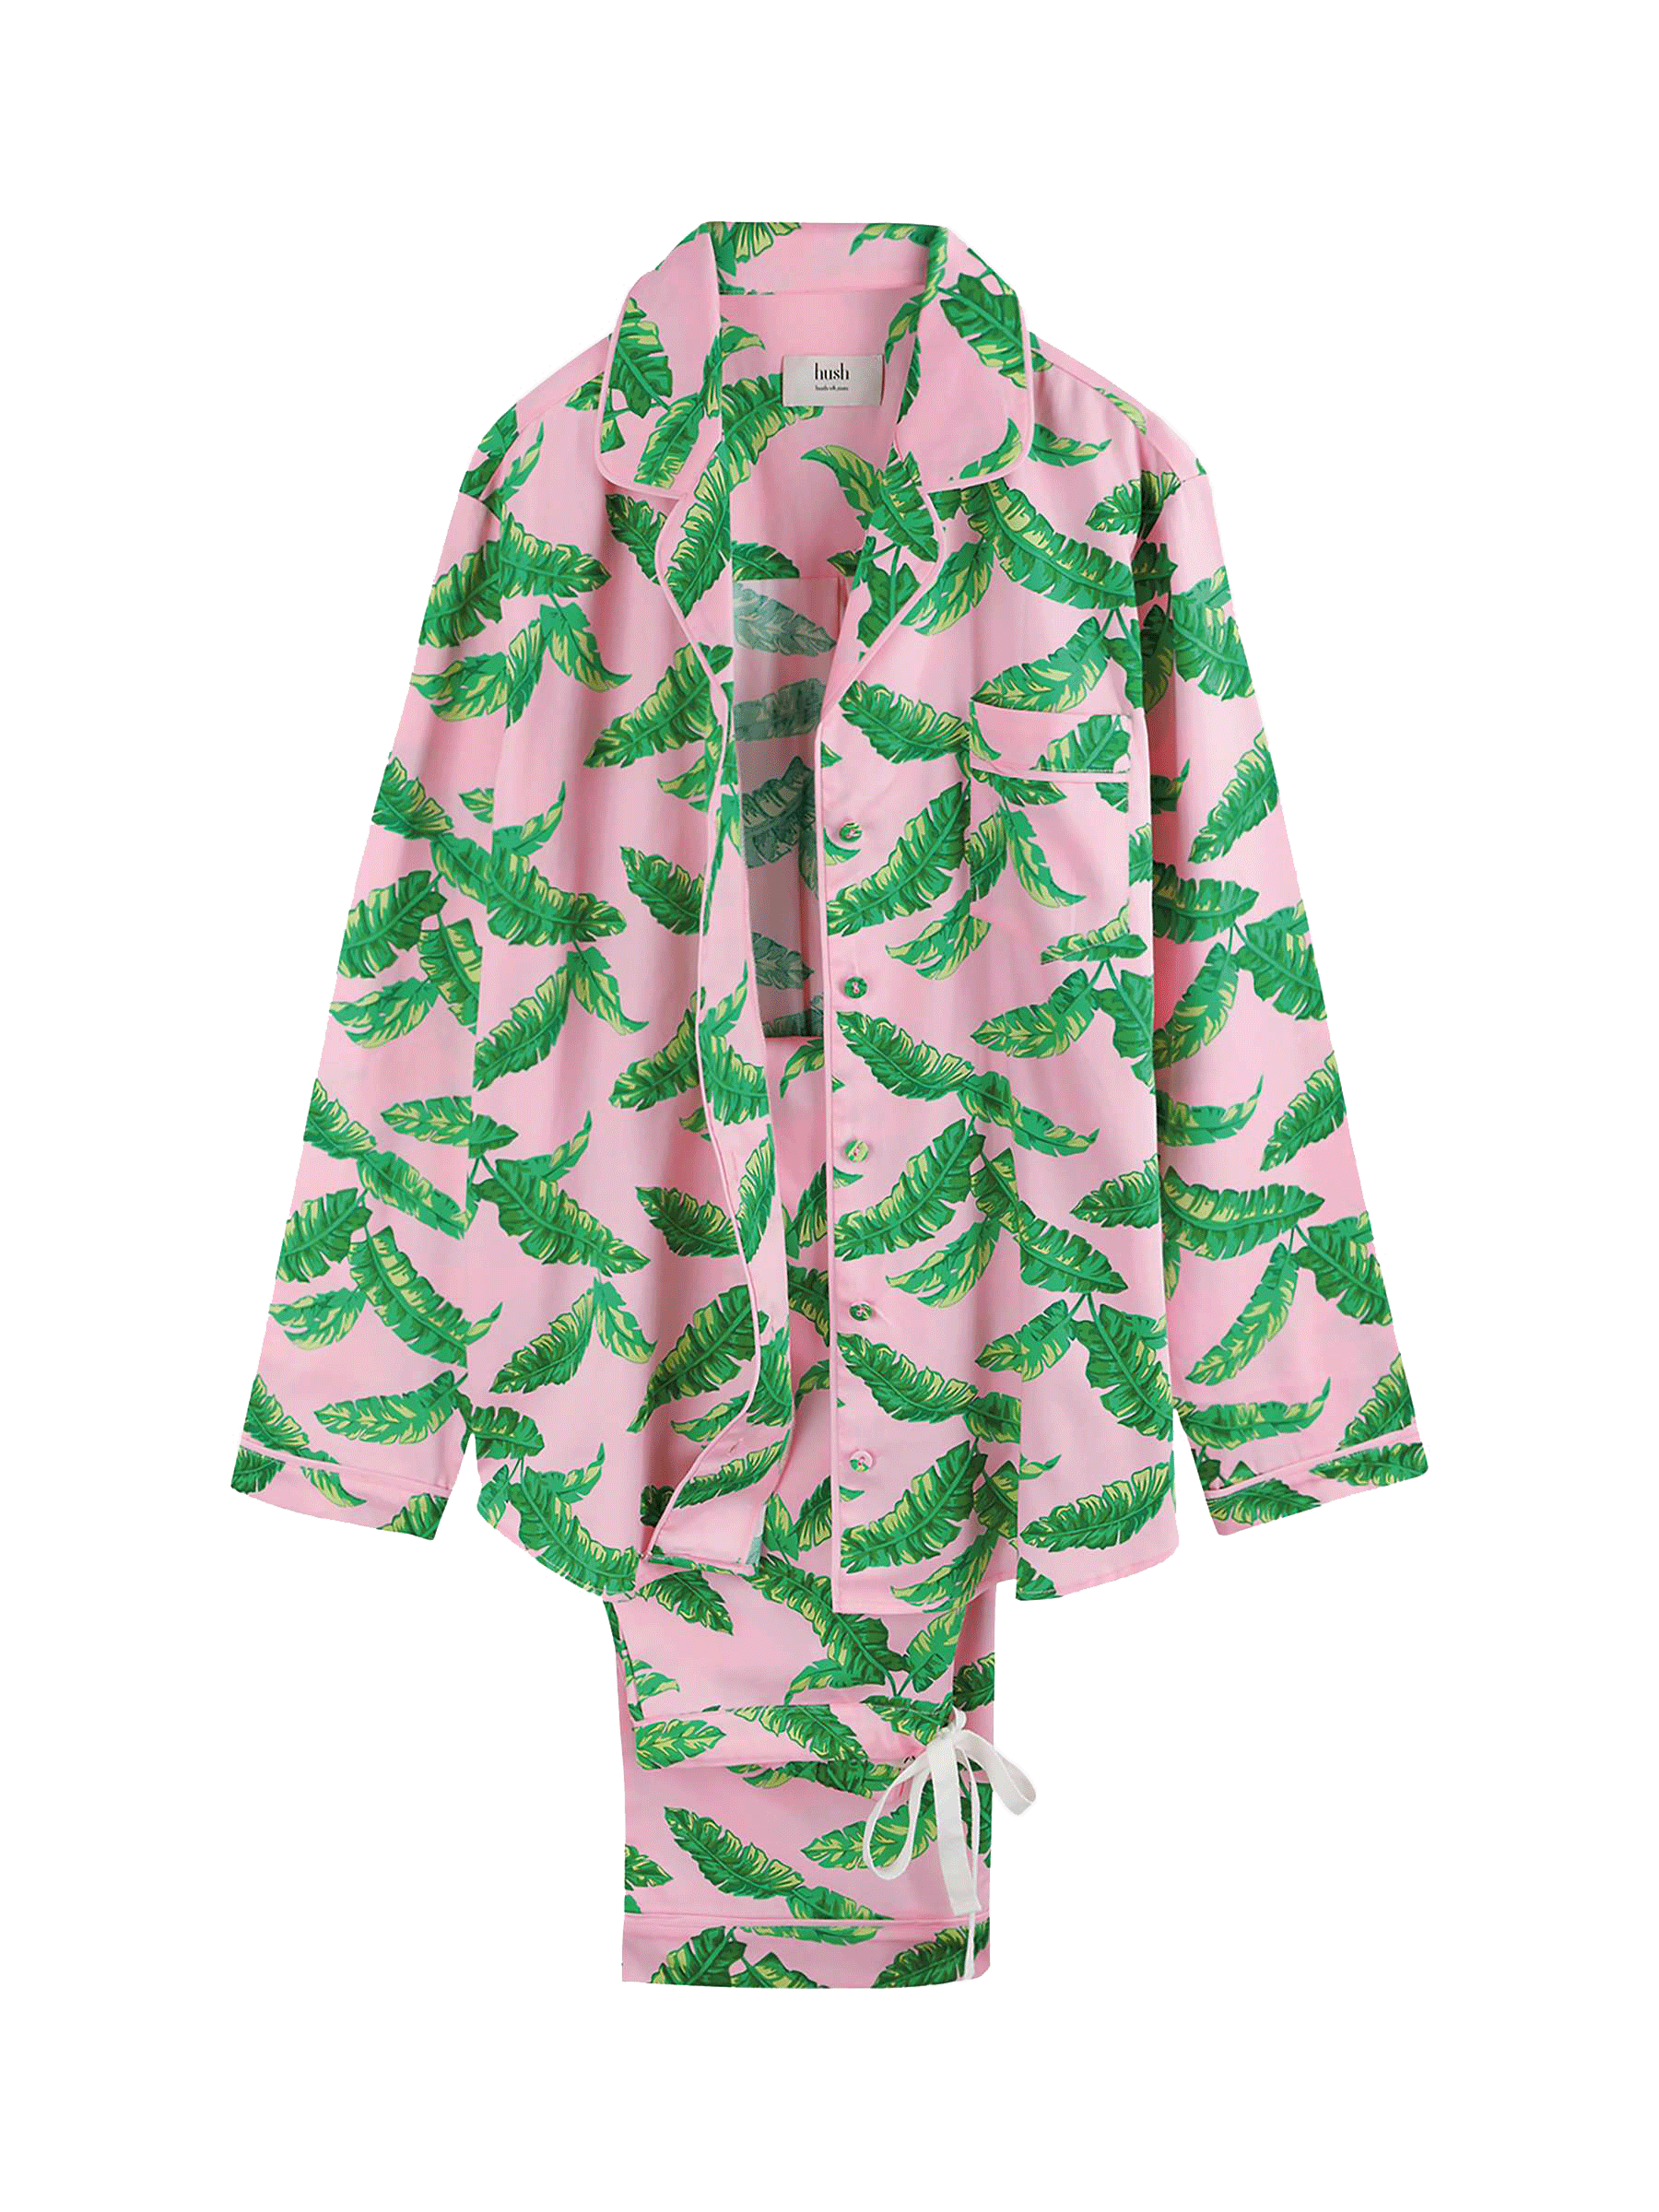 Pink Hush pyjamas with green leaf patterns.